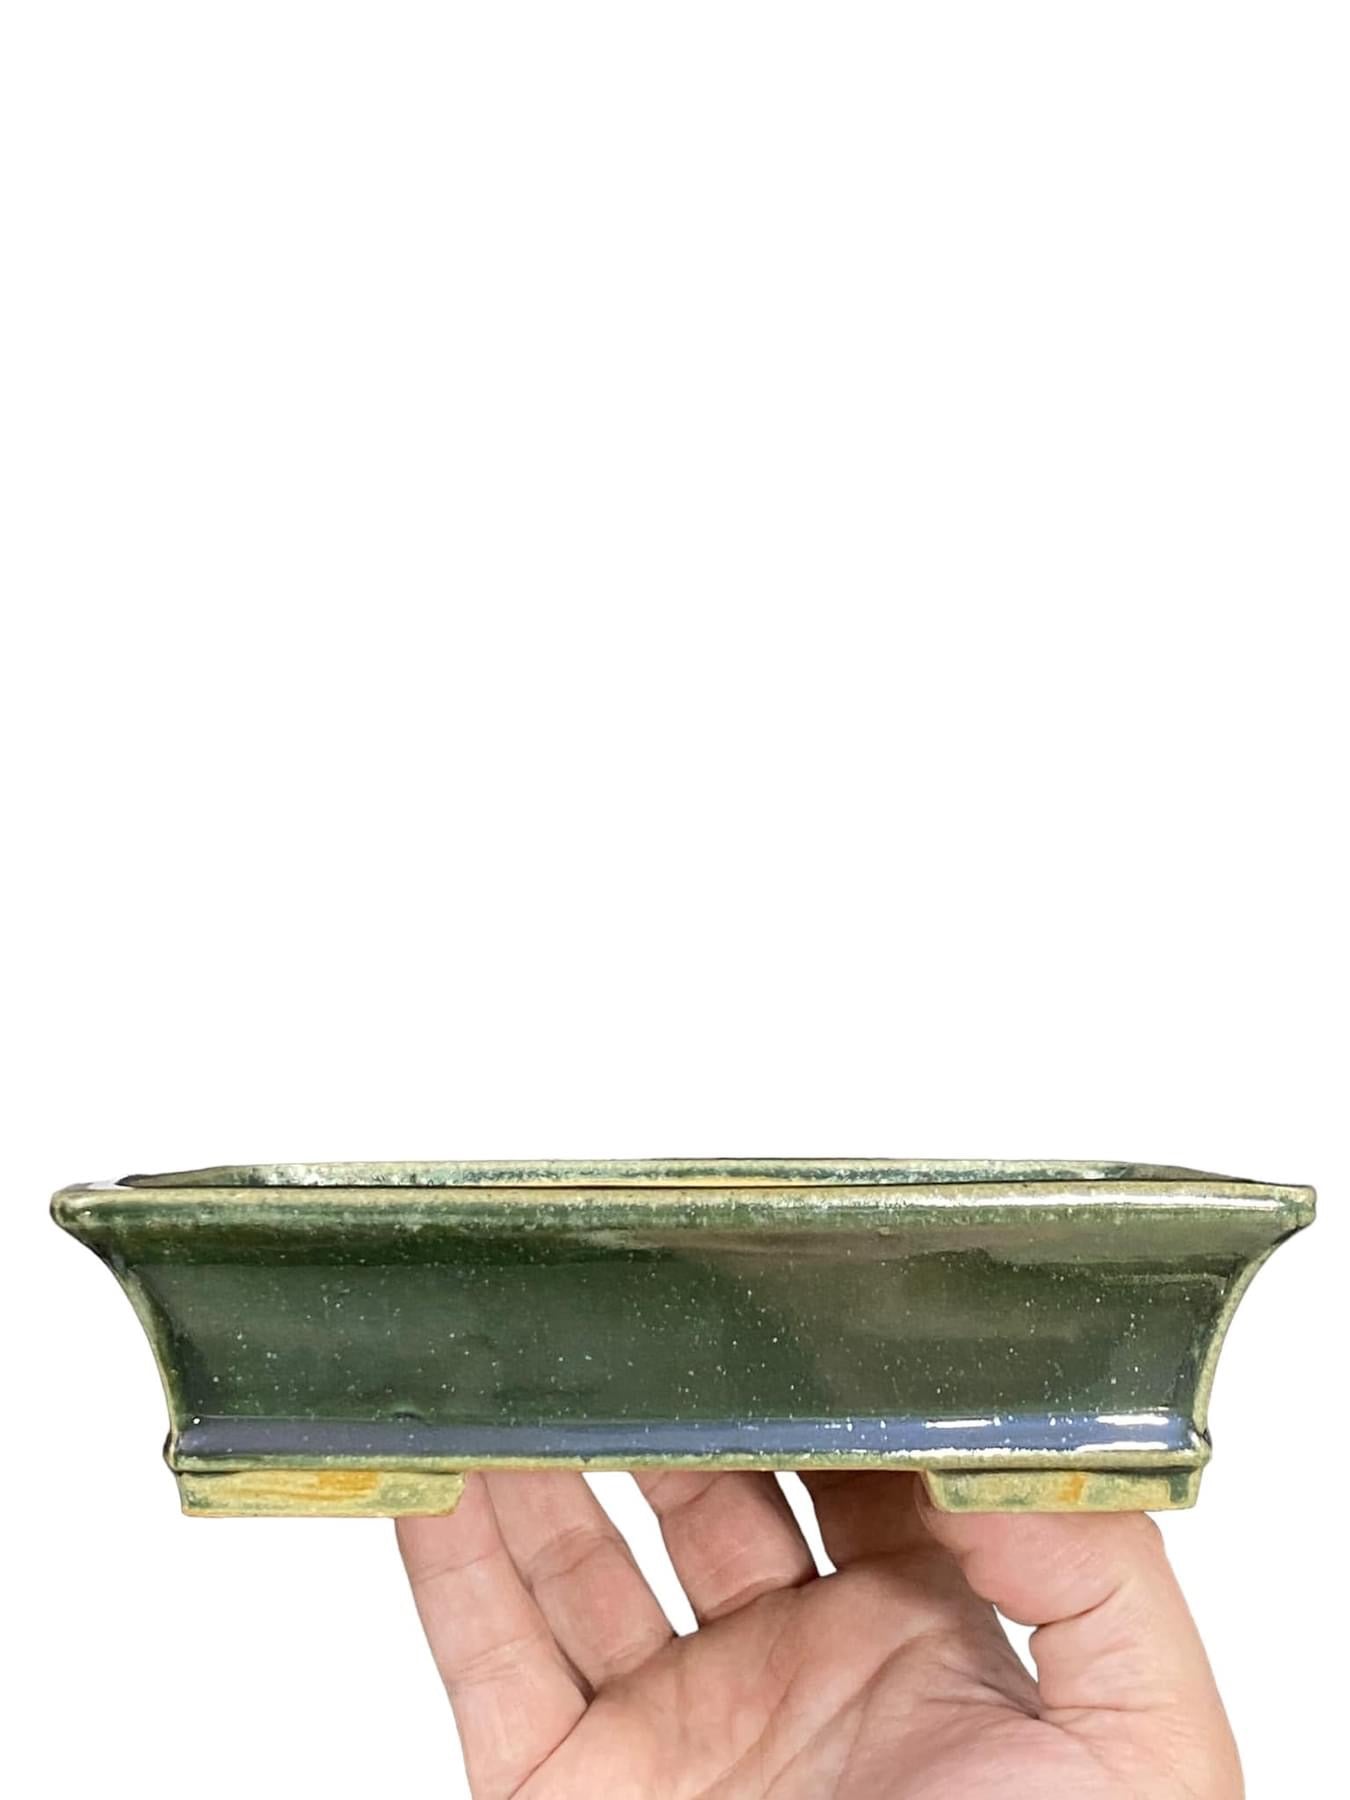 Shibakatsu - Shimmering Green Glazed Rectangle Bonsai Pot (7-1/2” wide)